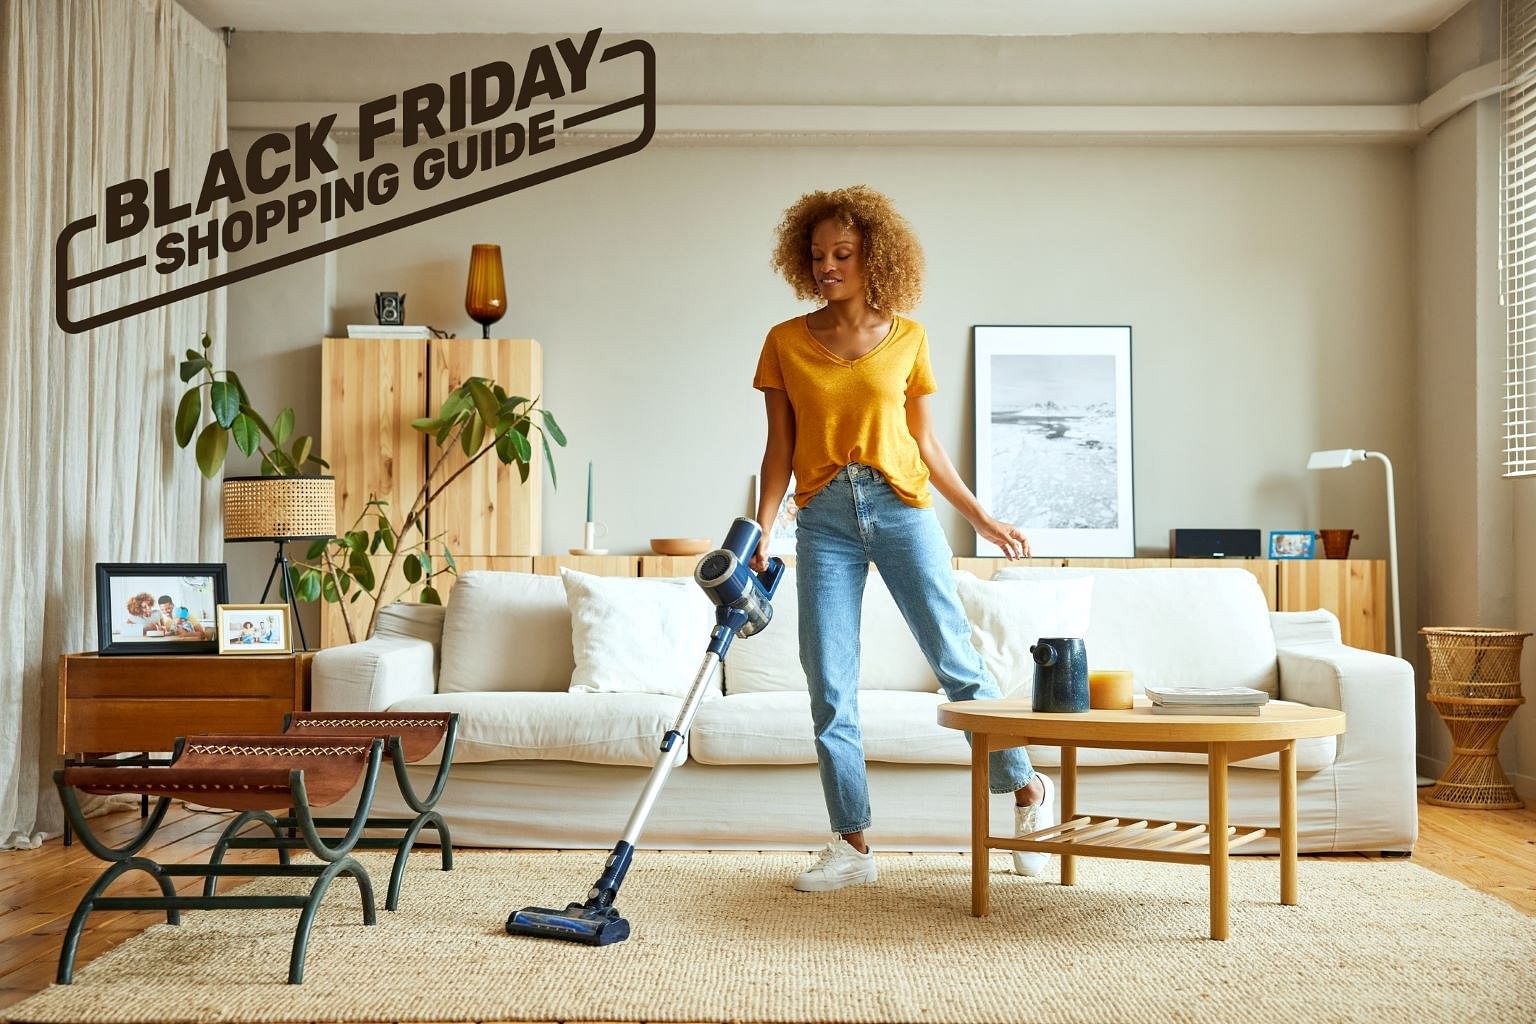  Best Black Friday vacuum deals